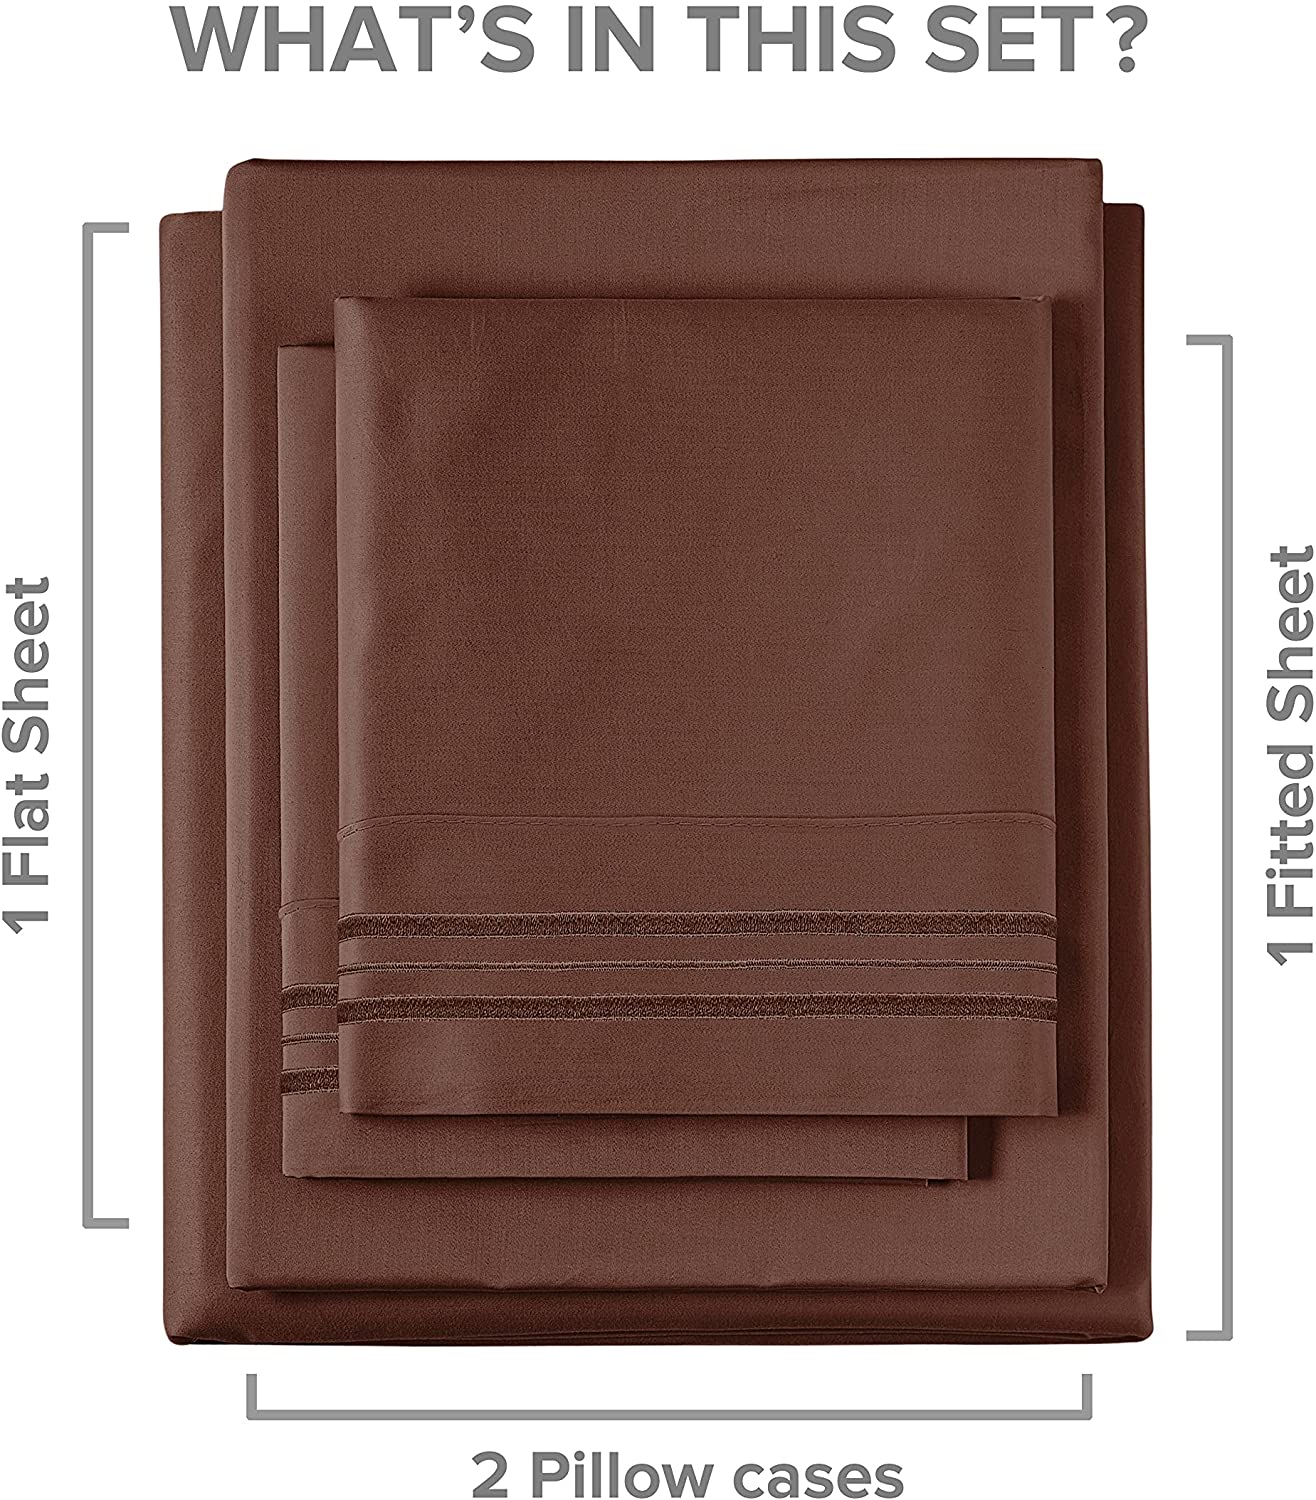 6 Piece Deep Pocket Sheet Set - Brown